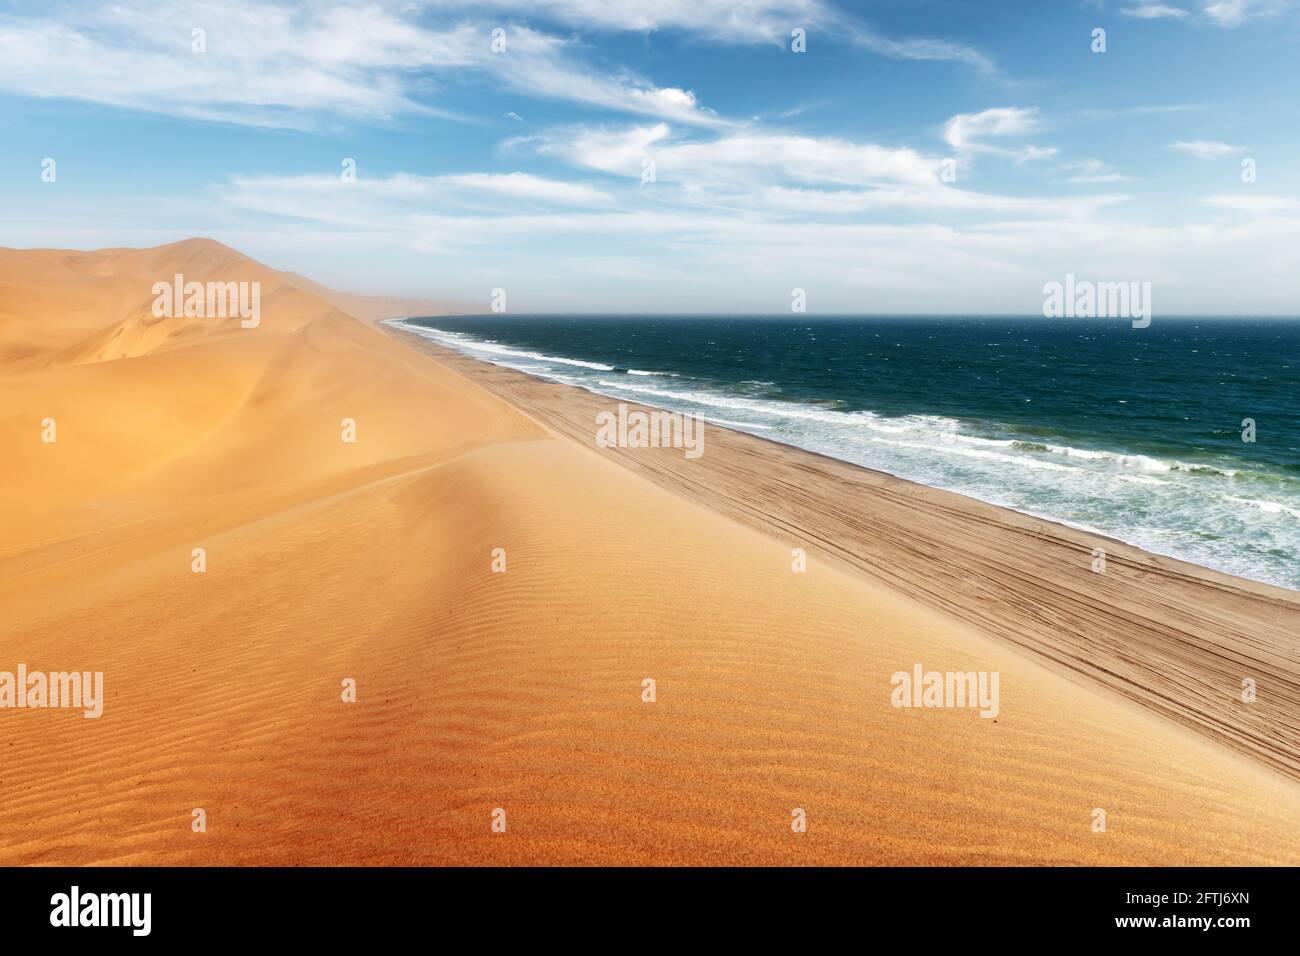 Namib desert and Atlantic ocean waves Stock Photo